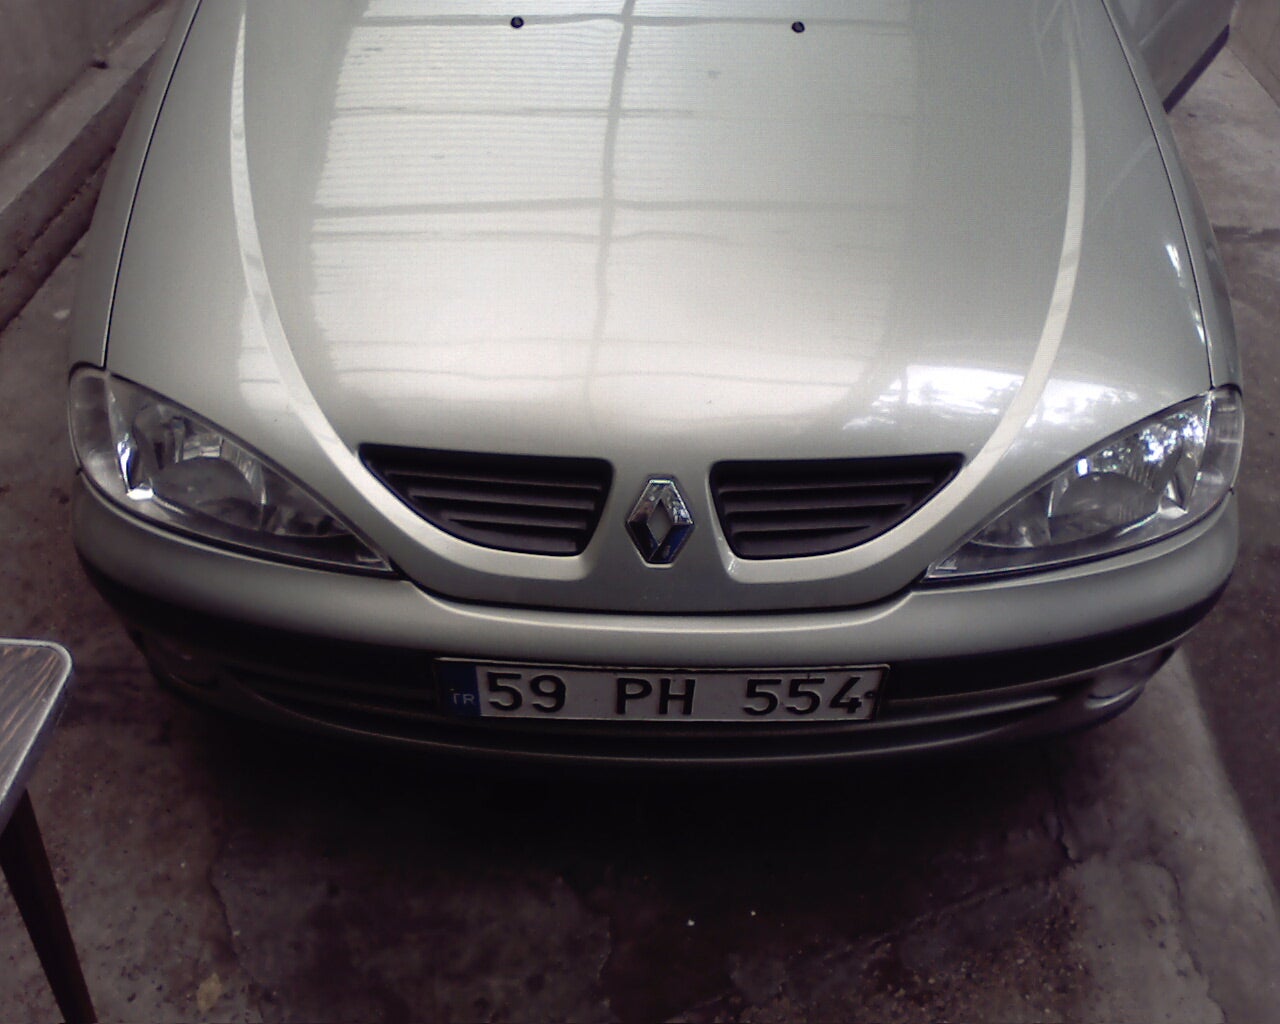 2001 Renault Megane picture, exterior